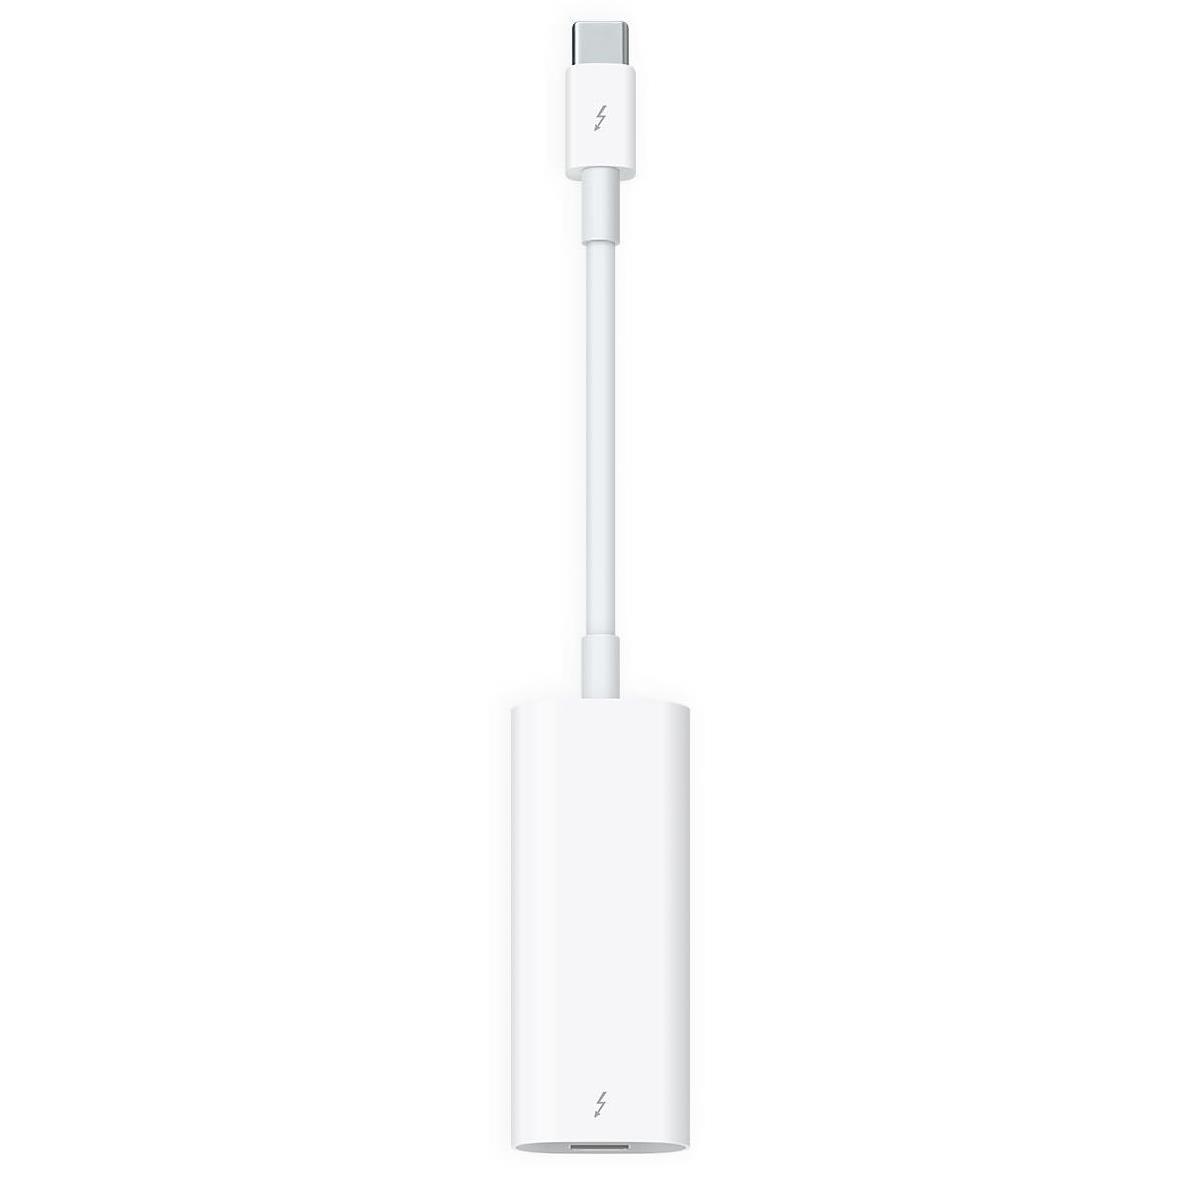 Image of Apple Thunderbolt 3 (USB-C) to Thunderbolt 2 Adapter